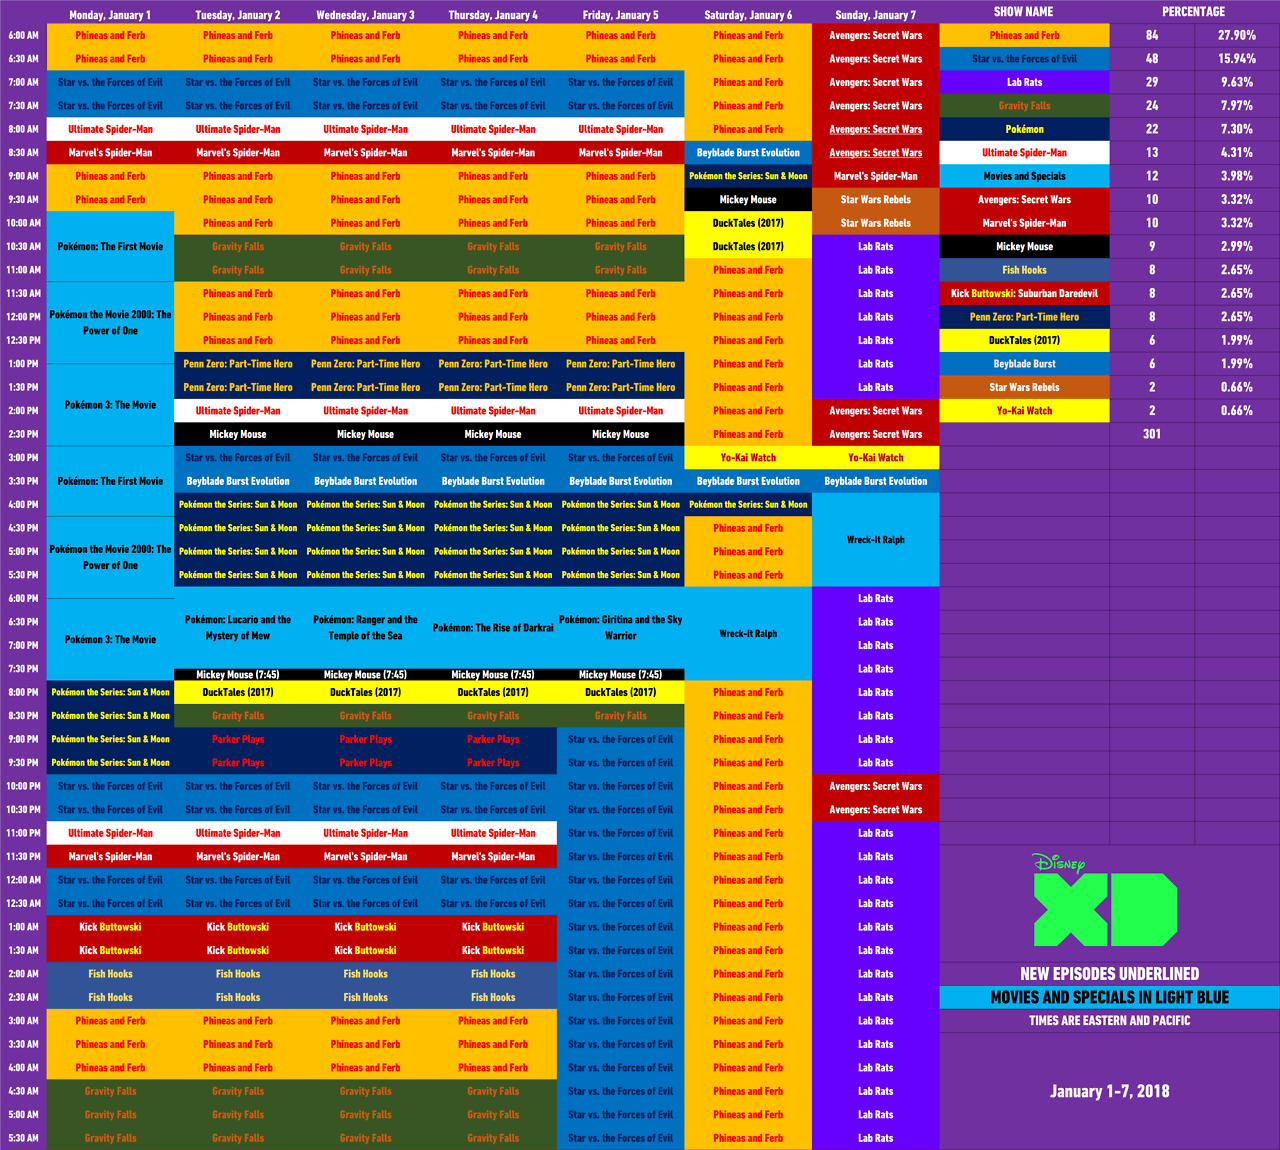 disney schedule thread and archive — here's disney xd's schedule in